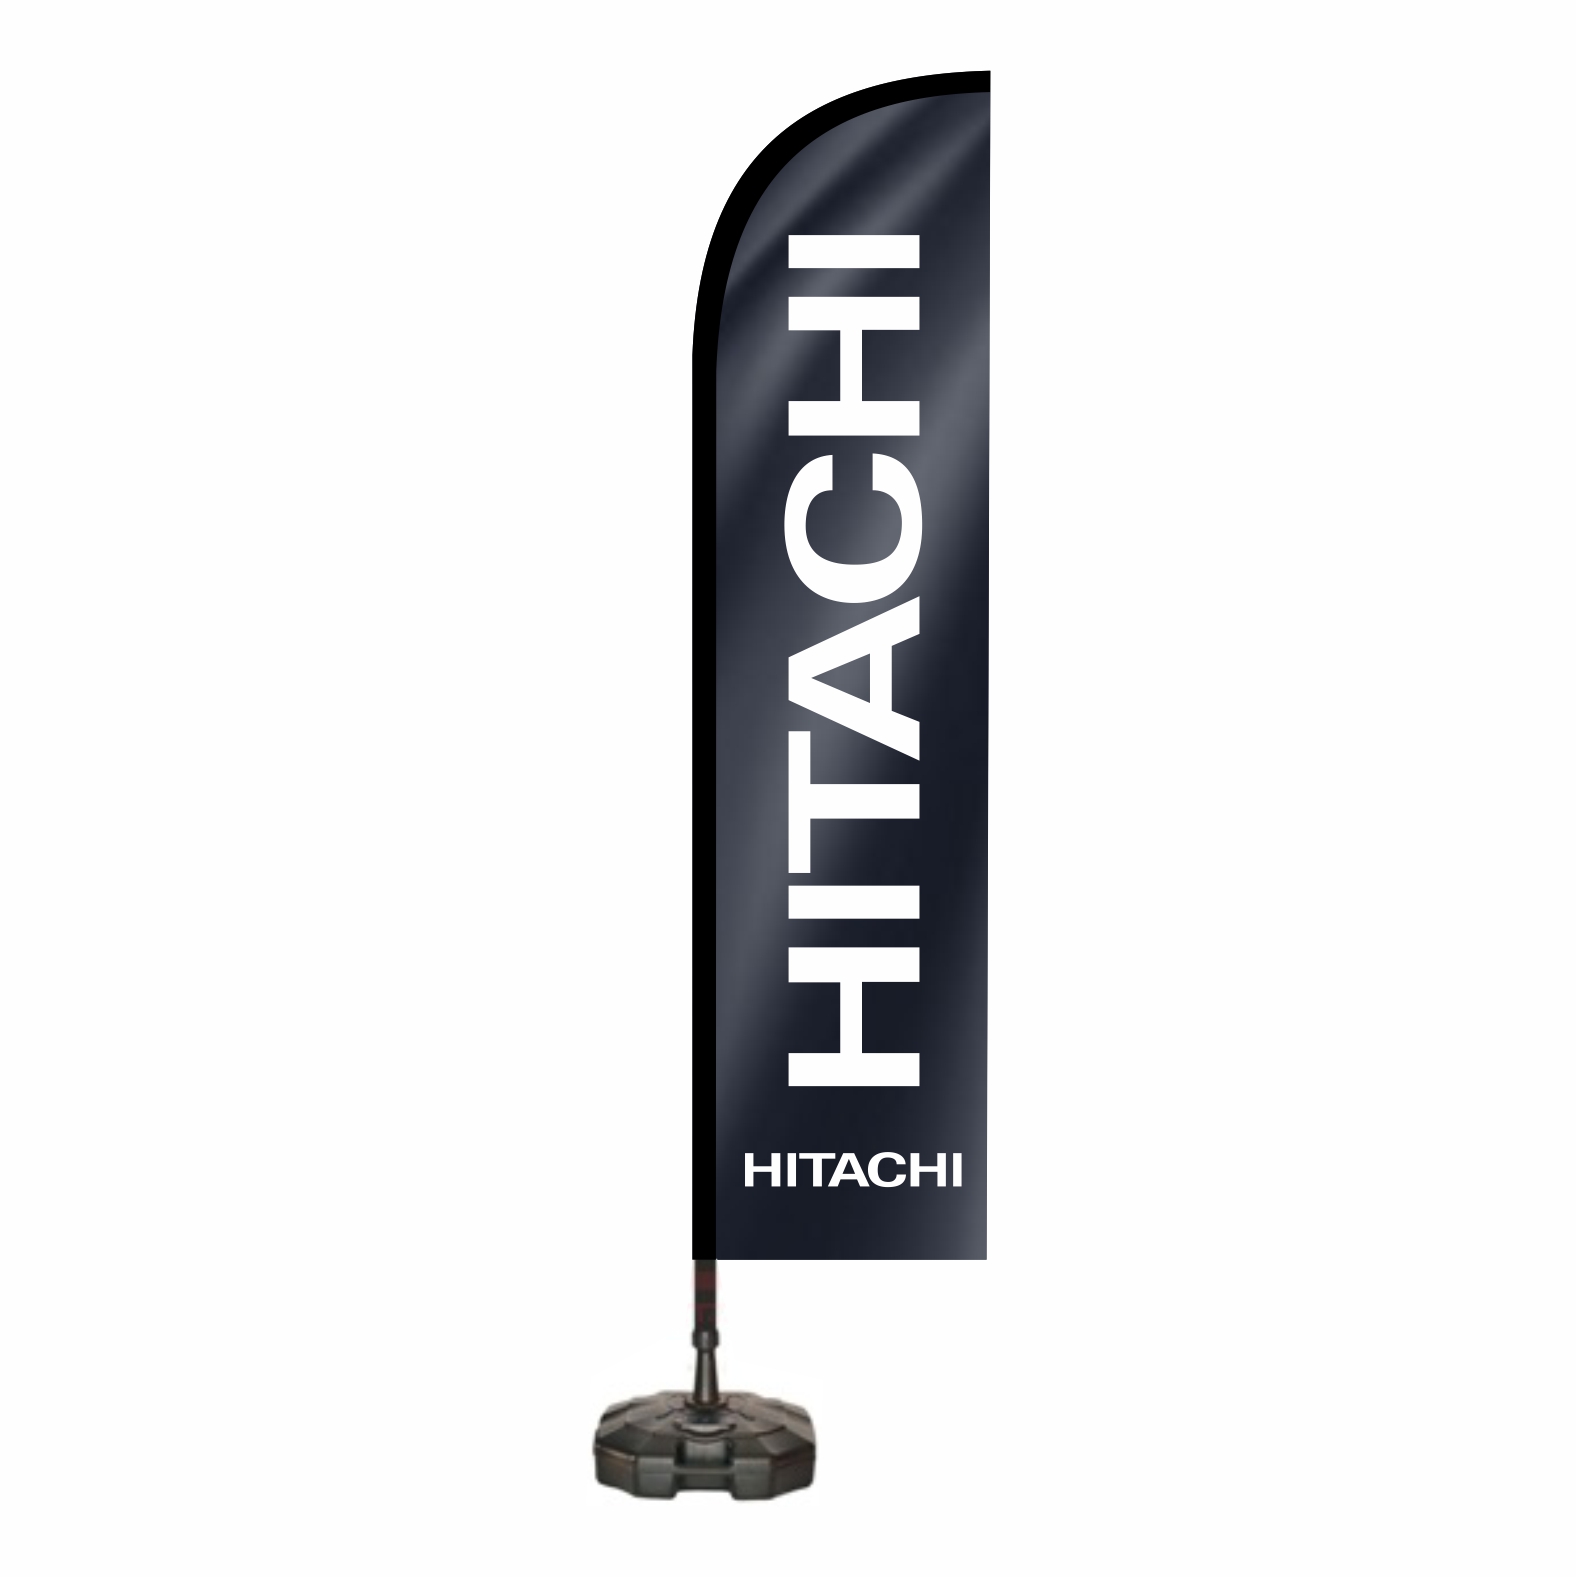 Hitachi Dkkan n Bayraklar